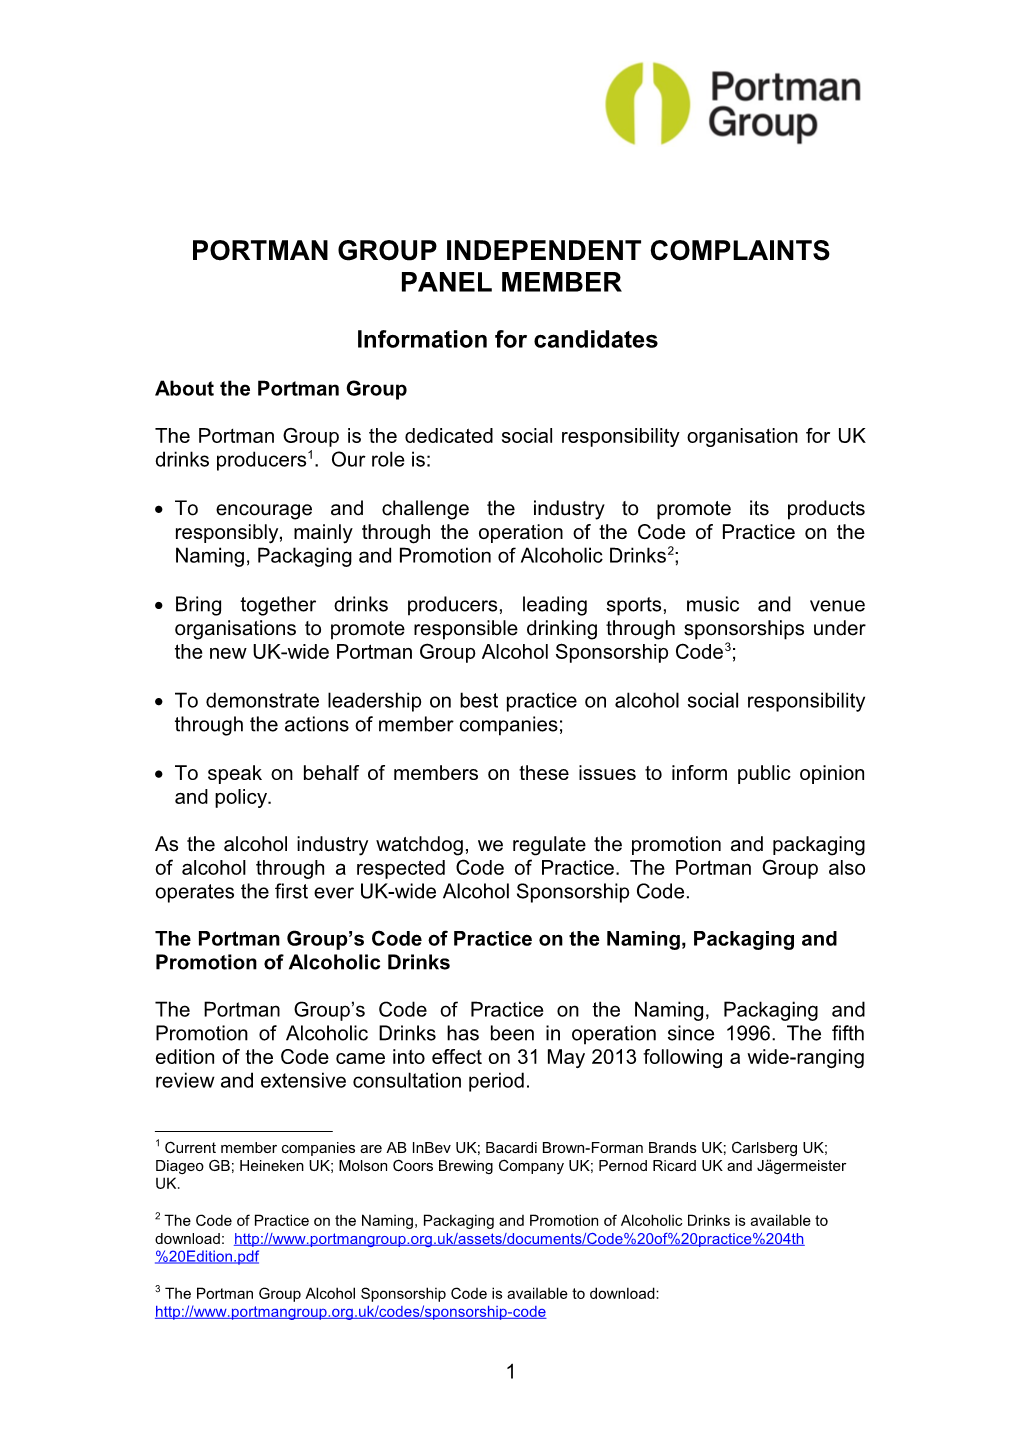 Portman Group Independent Complaints Panel Members